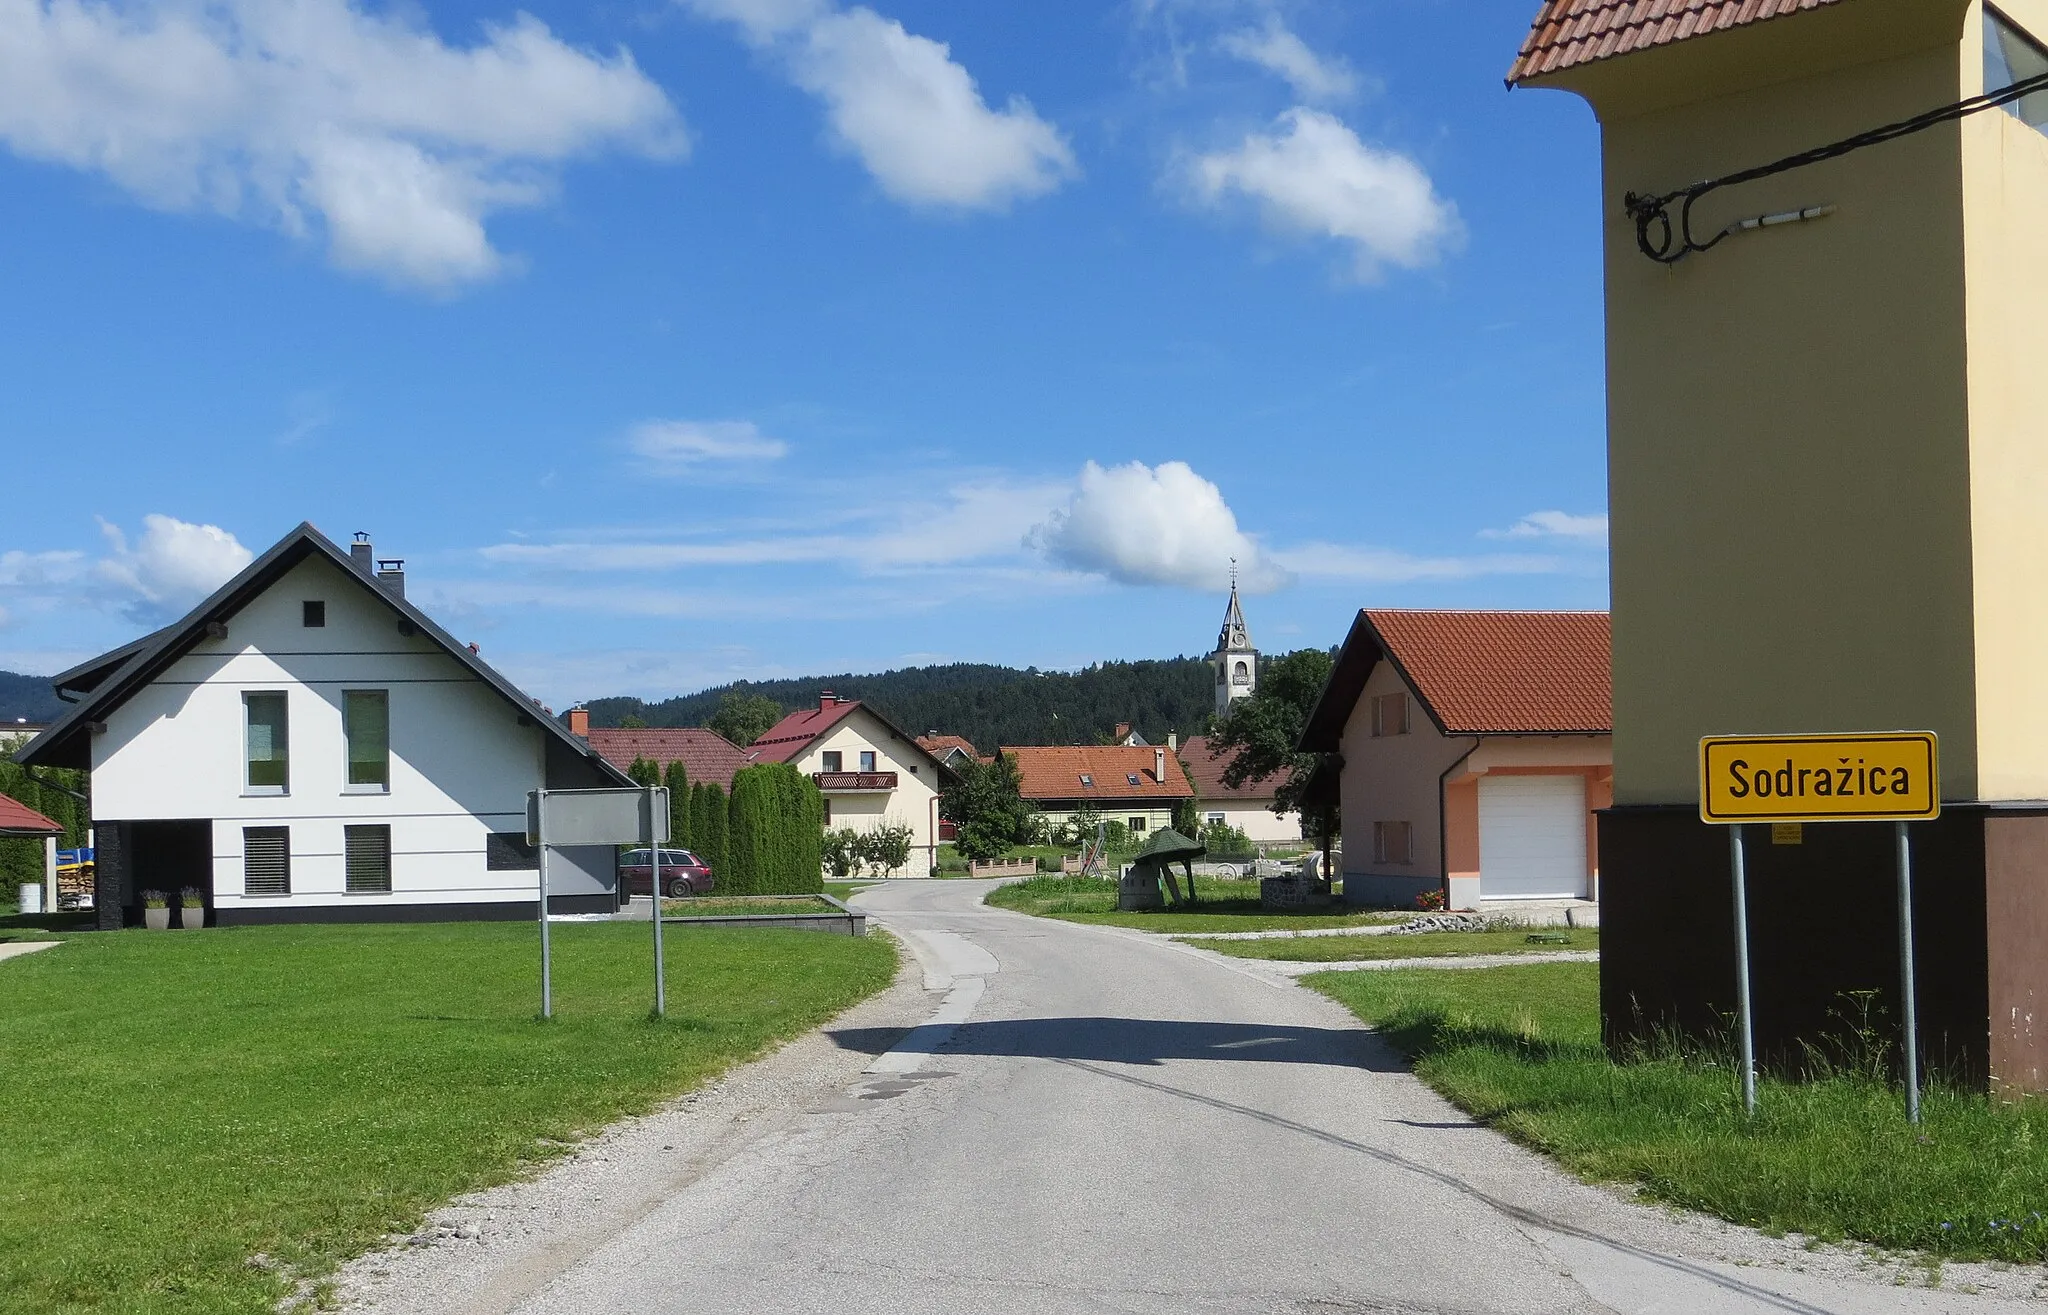 Photo showing: Sodražica, Municipality of Sodražica, Slovenia